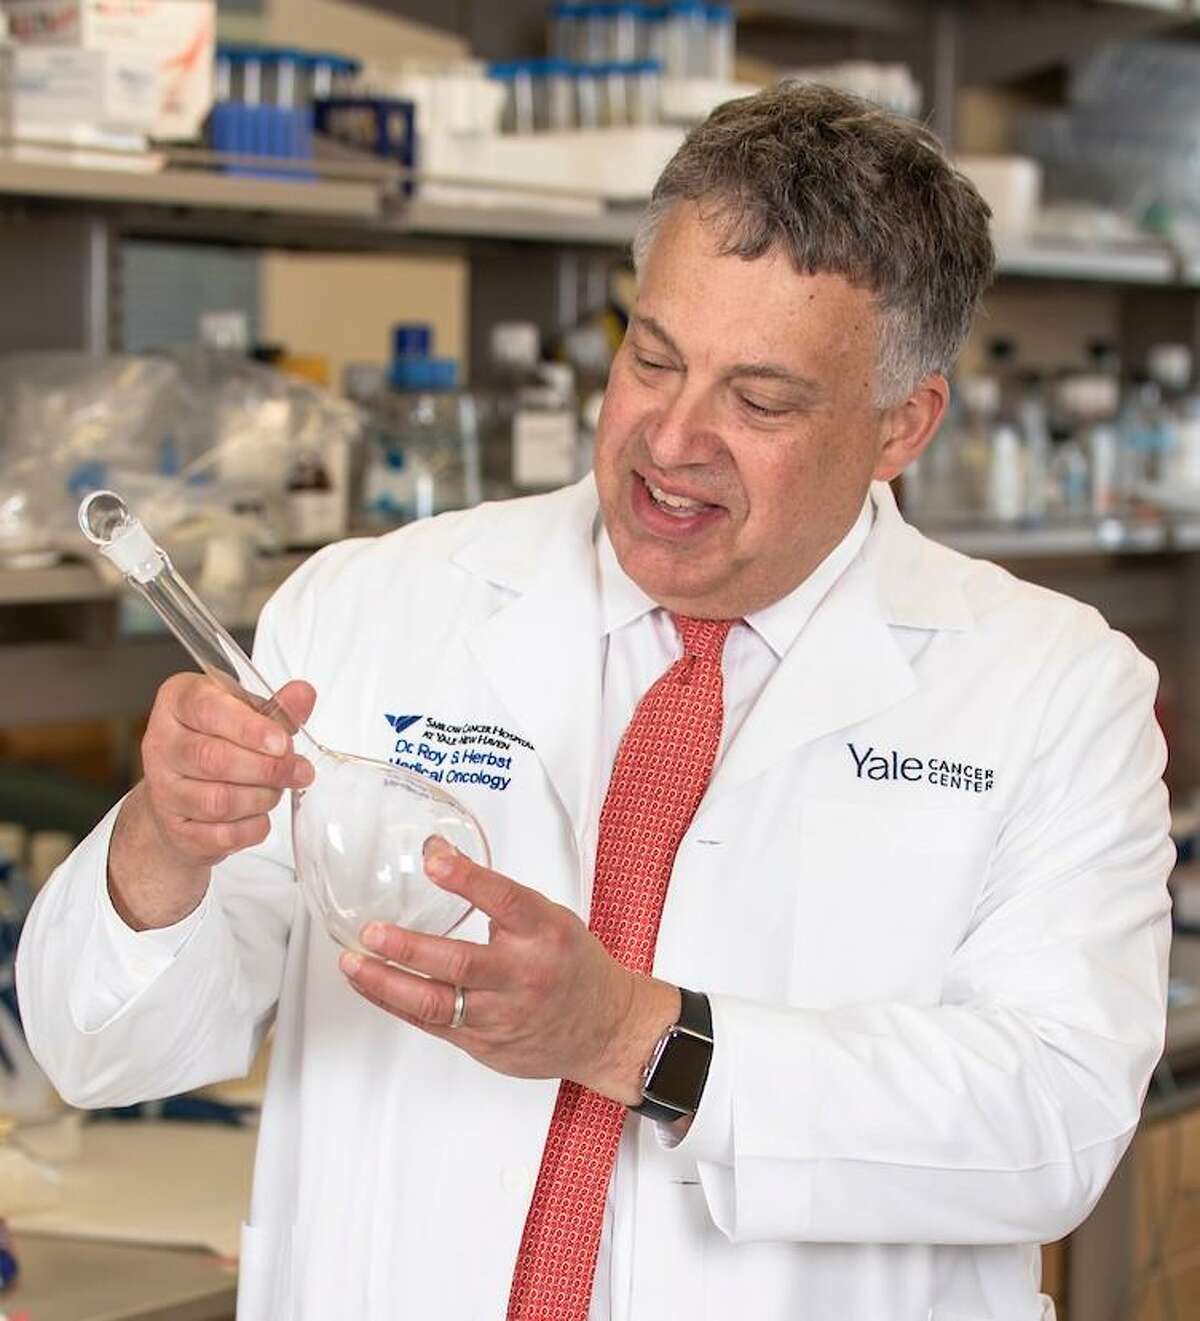 Dr. Roy Herbst